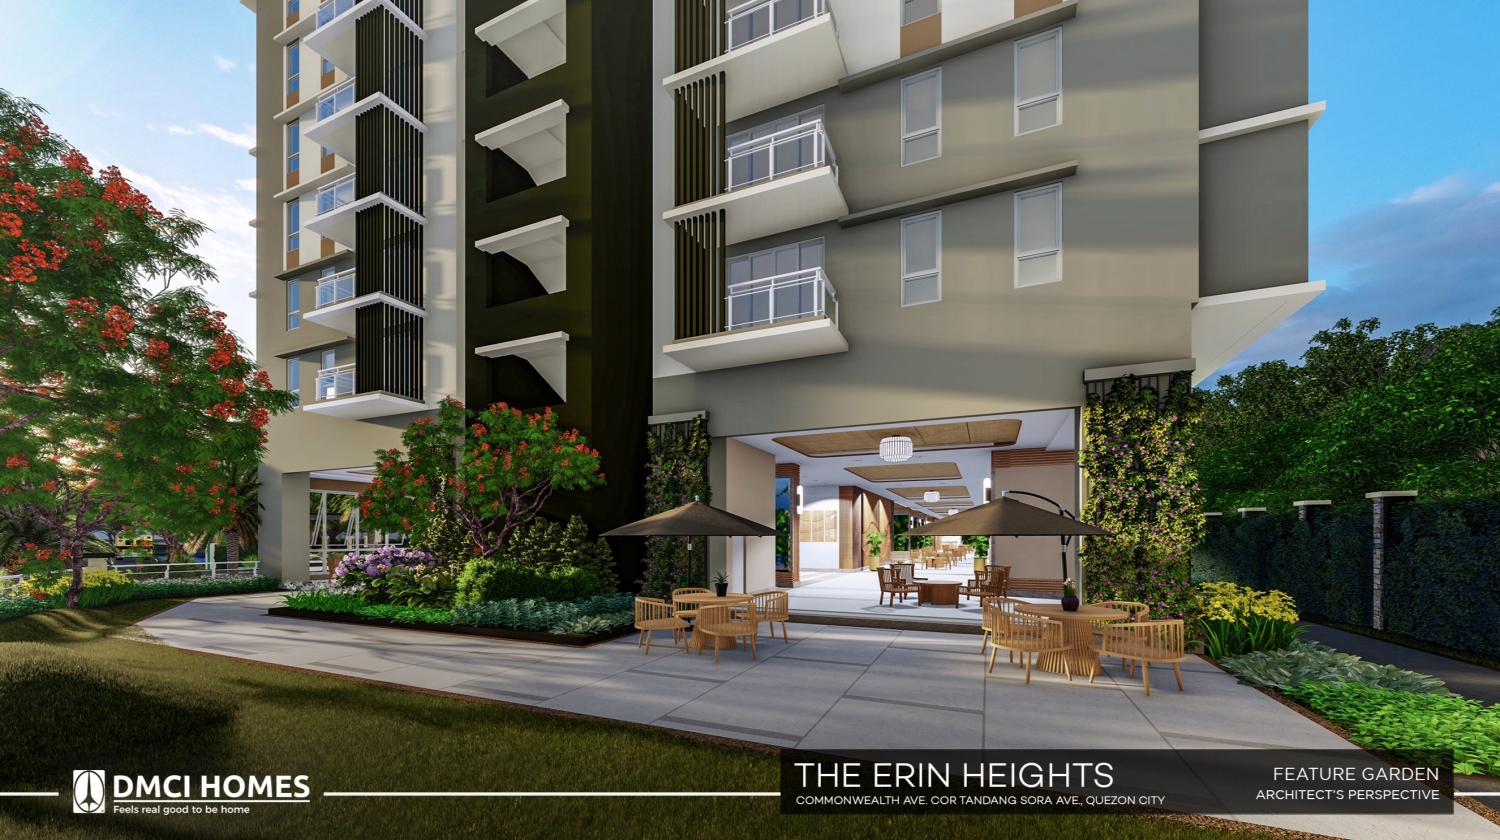 The Erin Heights Quezon City